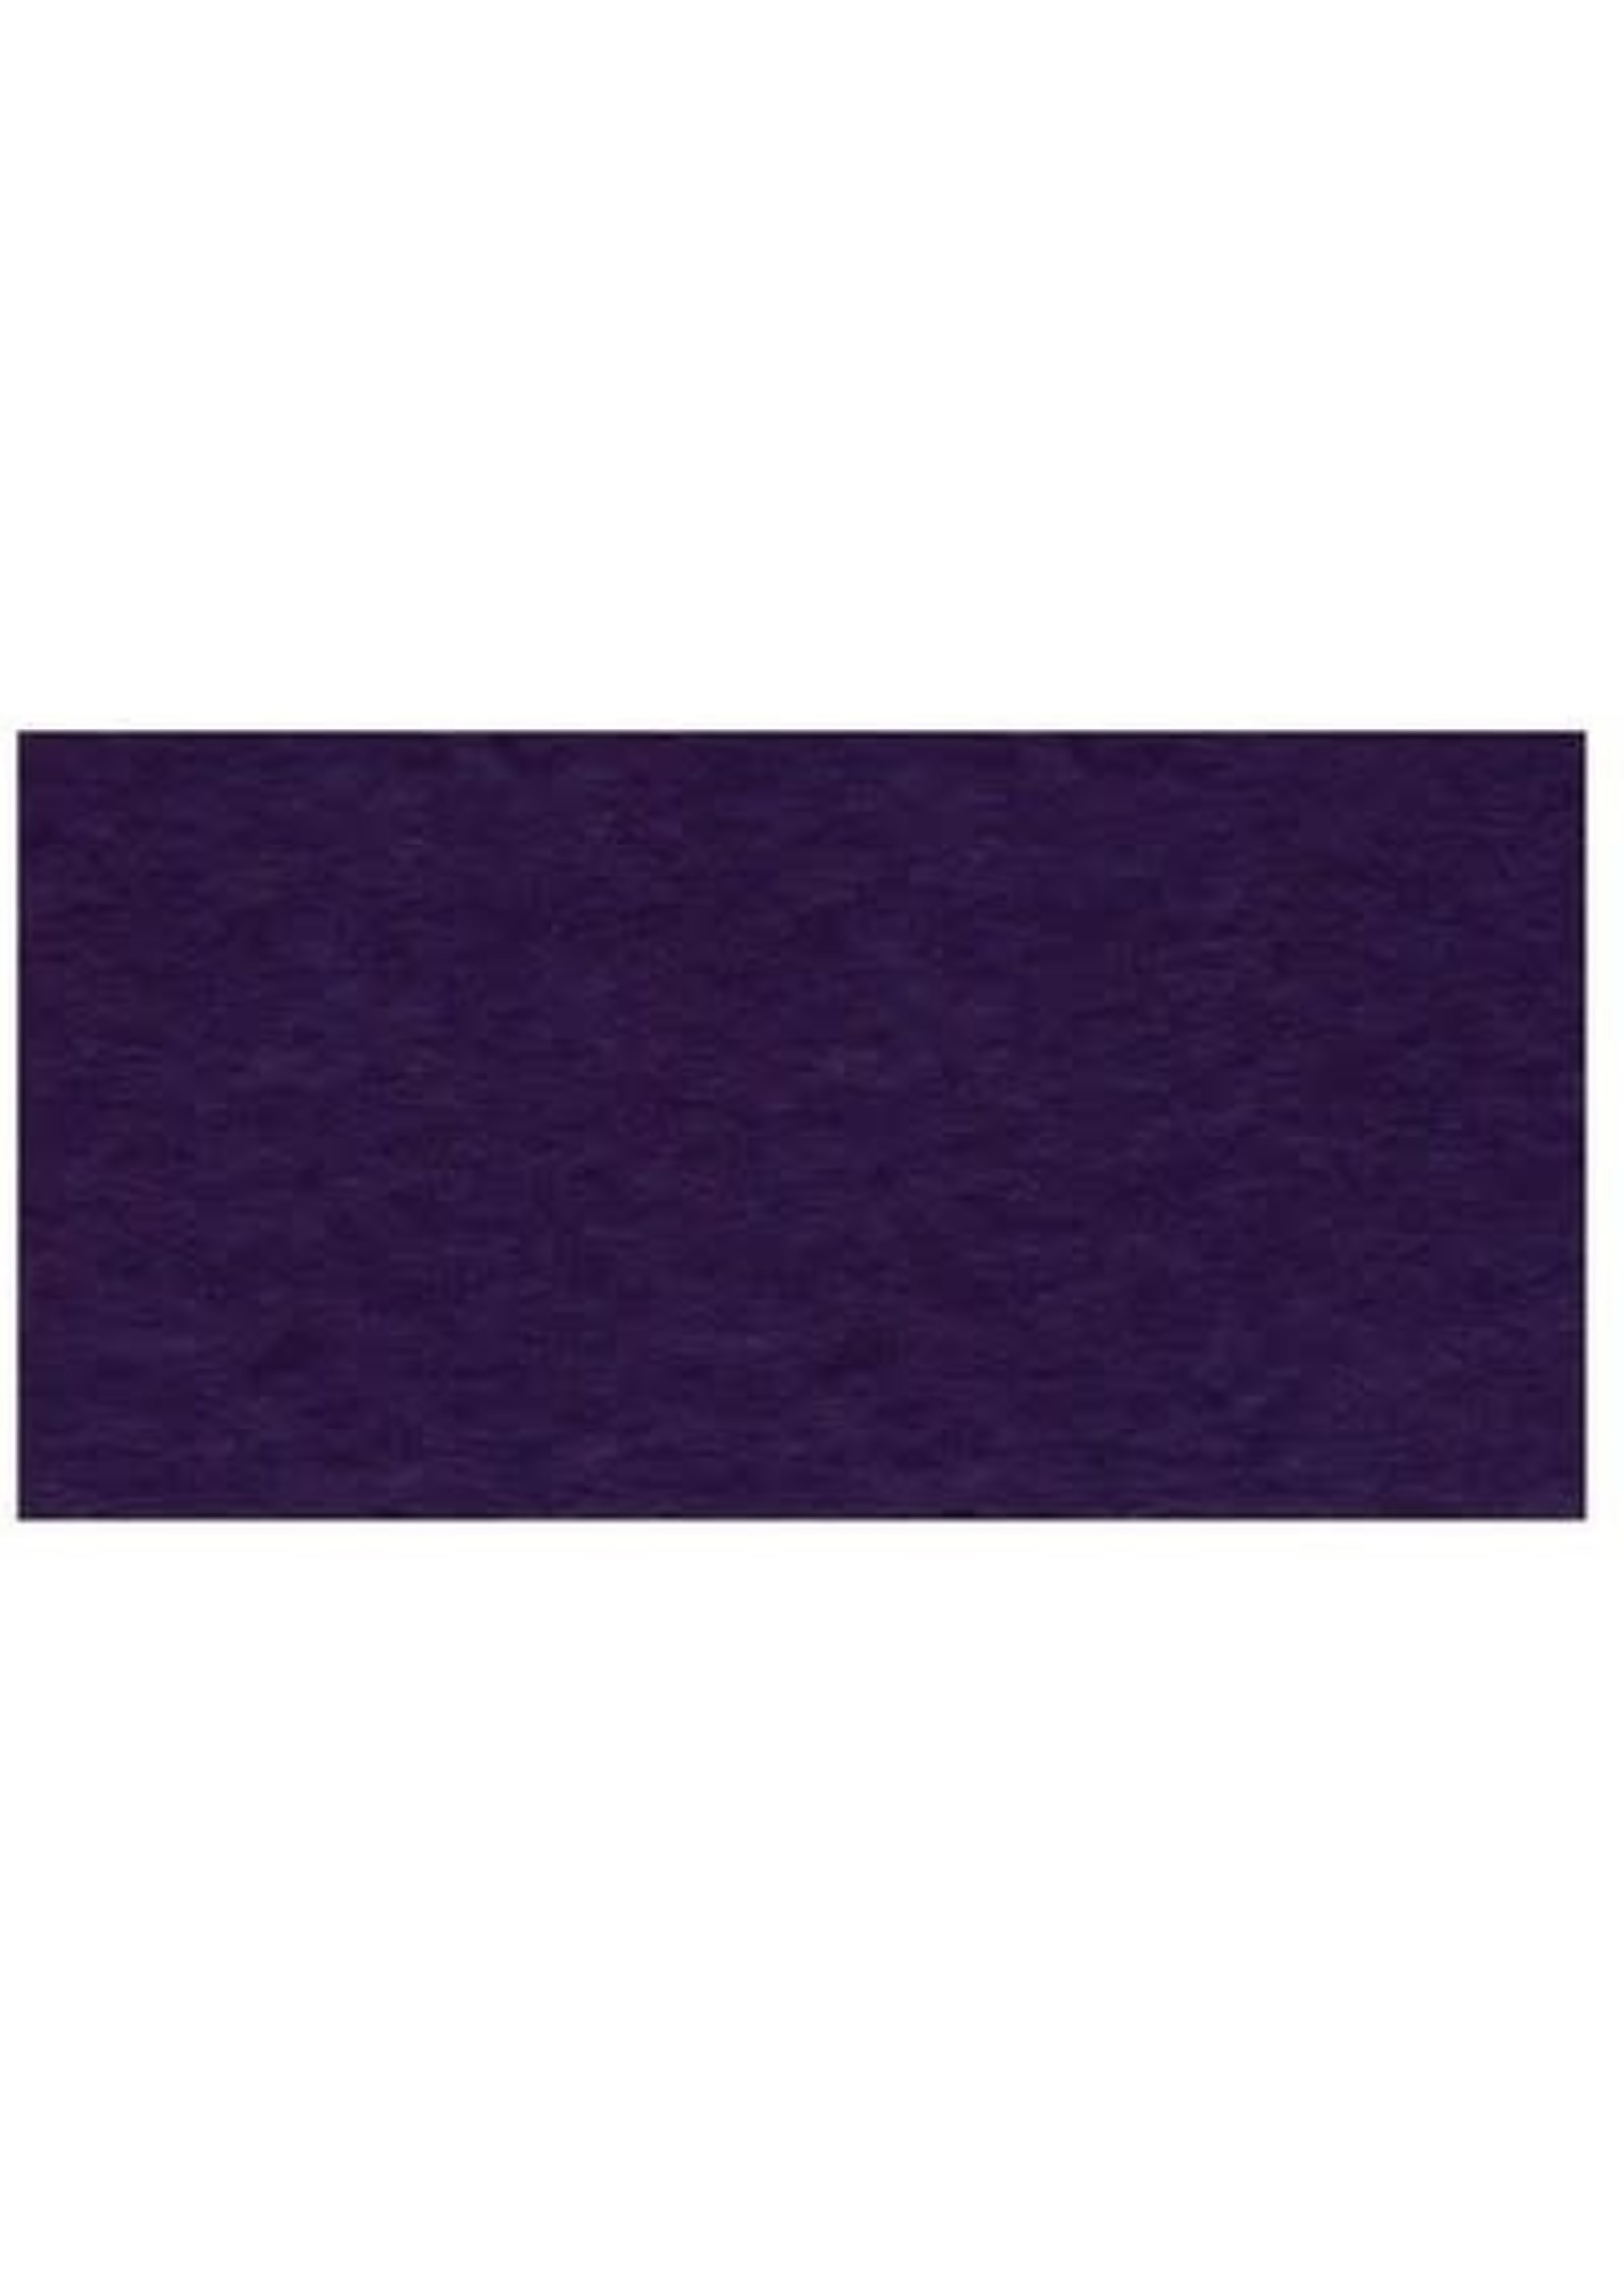 AMERICAN CRAFTS/BAZZILL BASICS 12x12 Bazzill cardstock Classic Purple